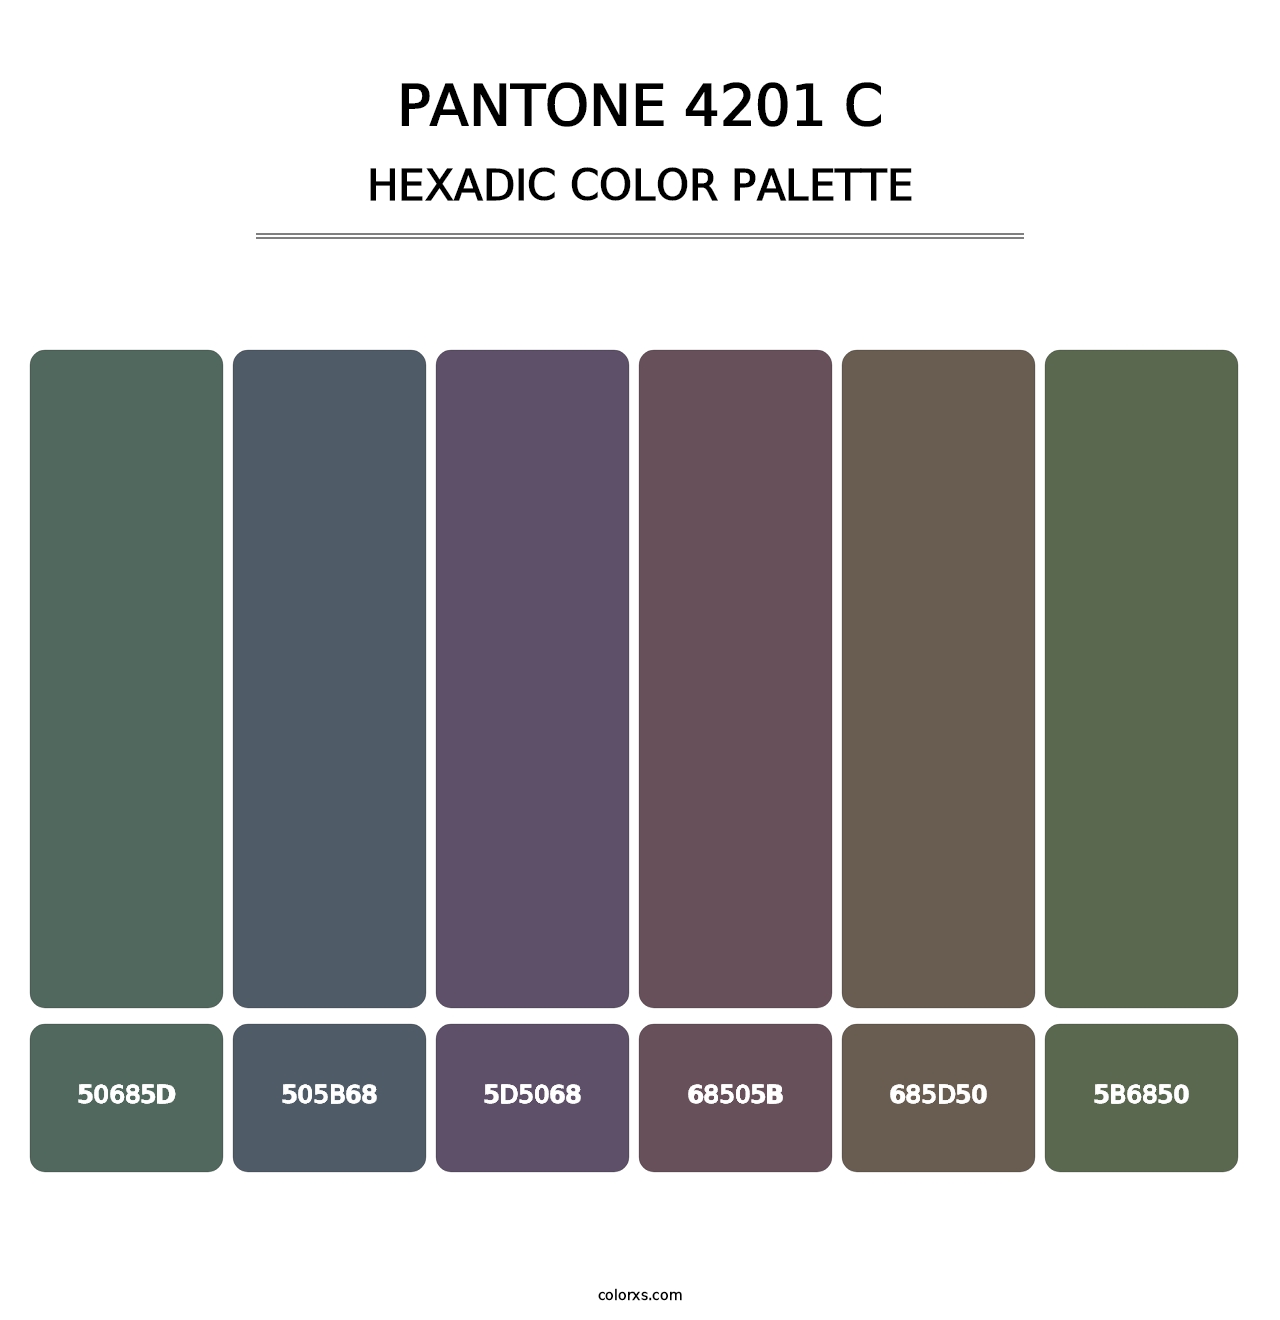 PANTONE 4201 C - Hexadic Color Palette